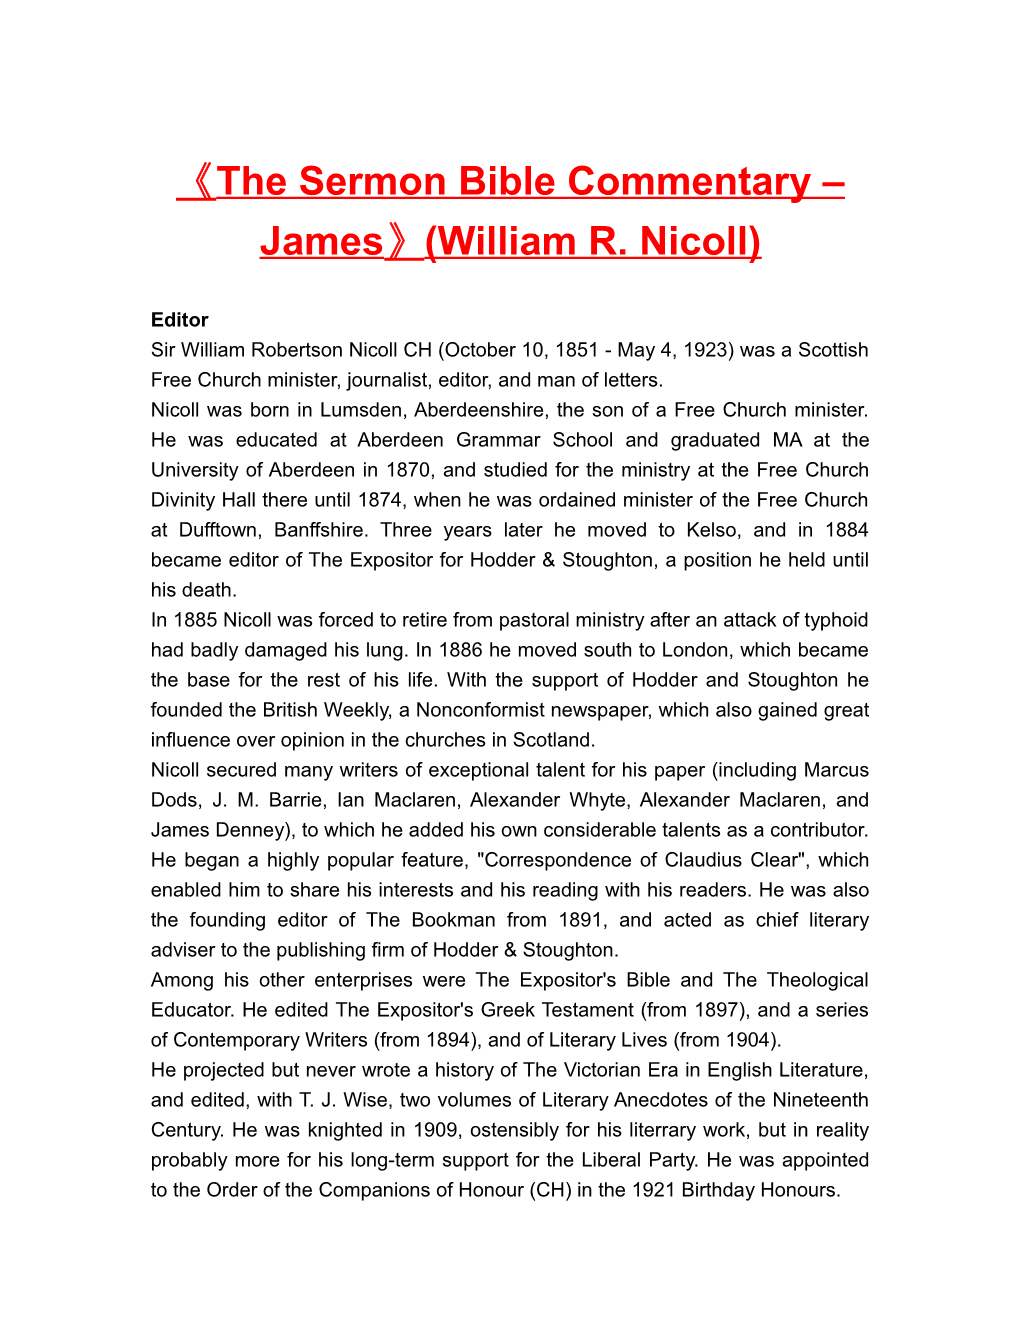 The Sermon Bible Commentary James (William R. Nicoll)